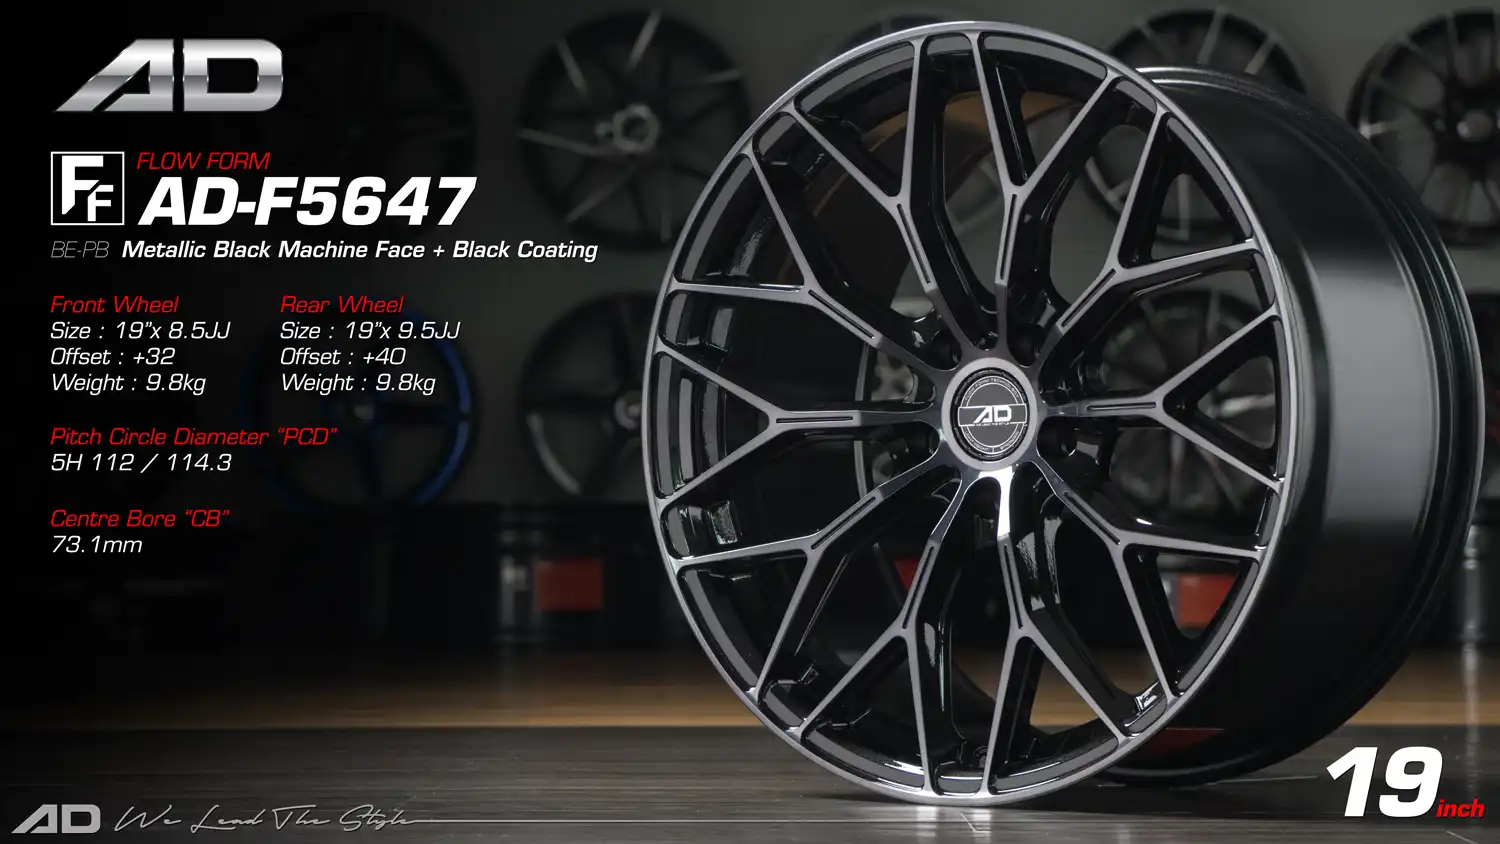 Ad wheels | Flow Form 5647 19 inch 5H112/114.3